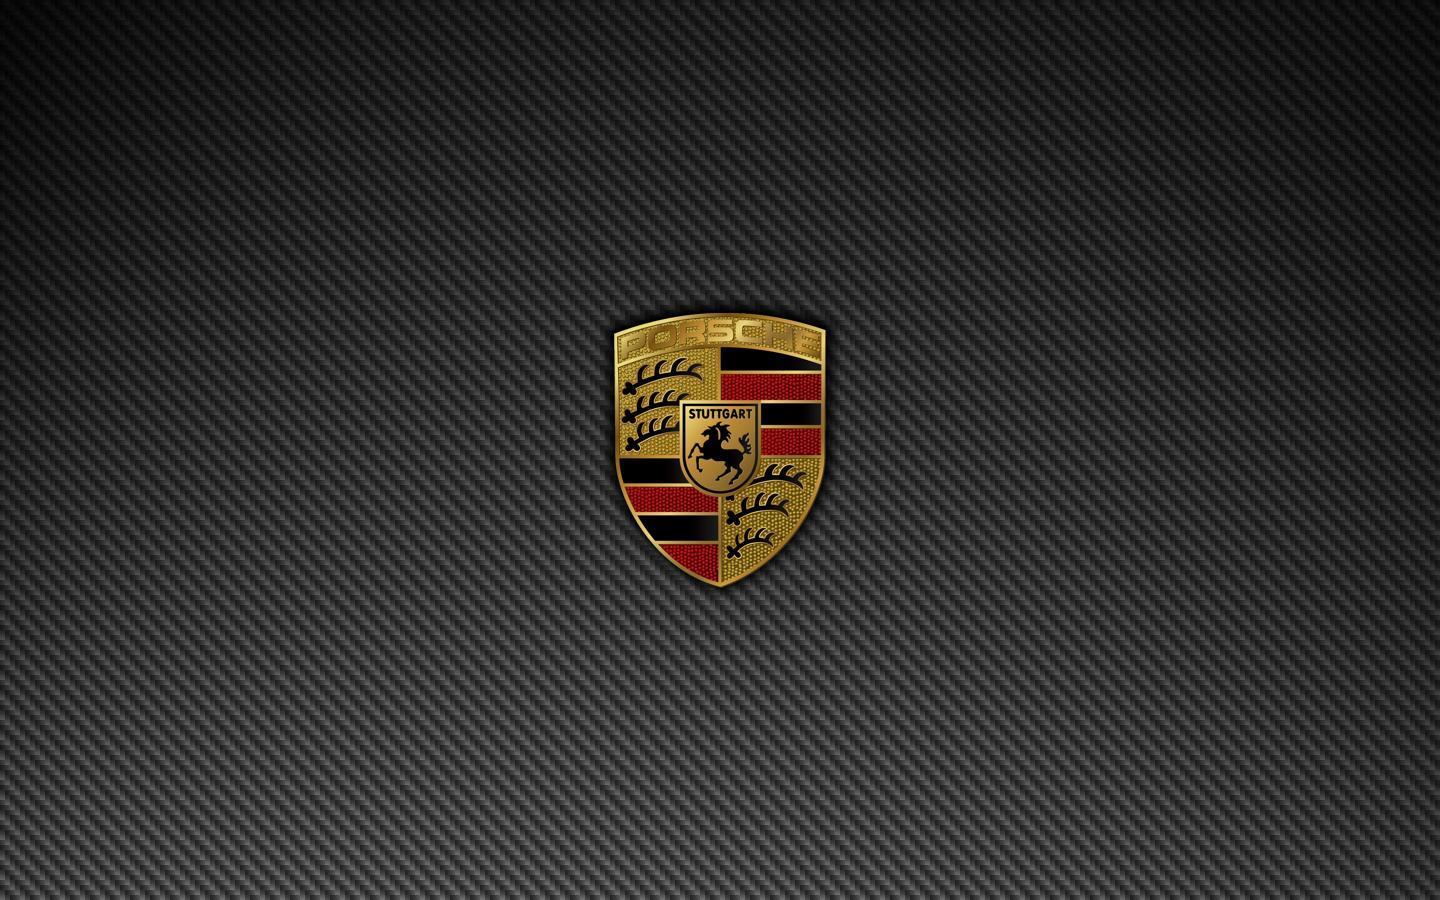 Honda logo wallpaper free download, Porsche logo